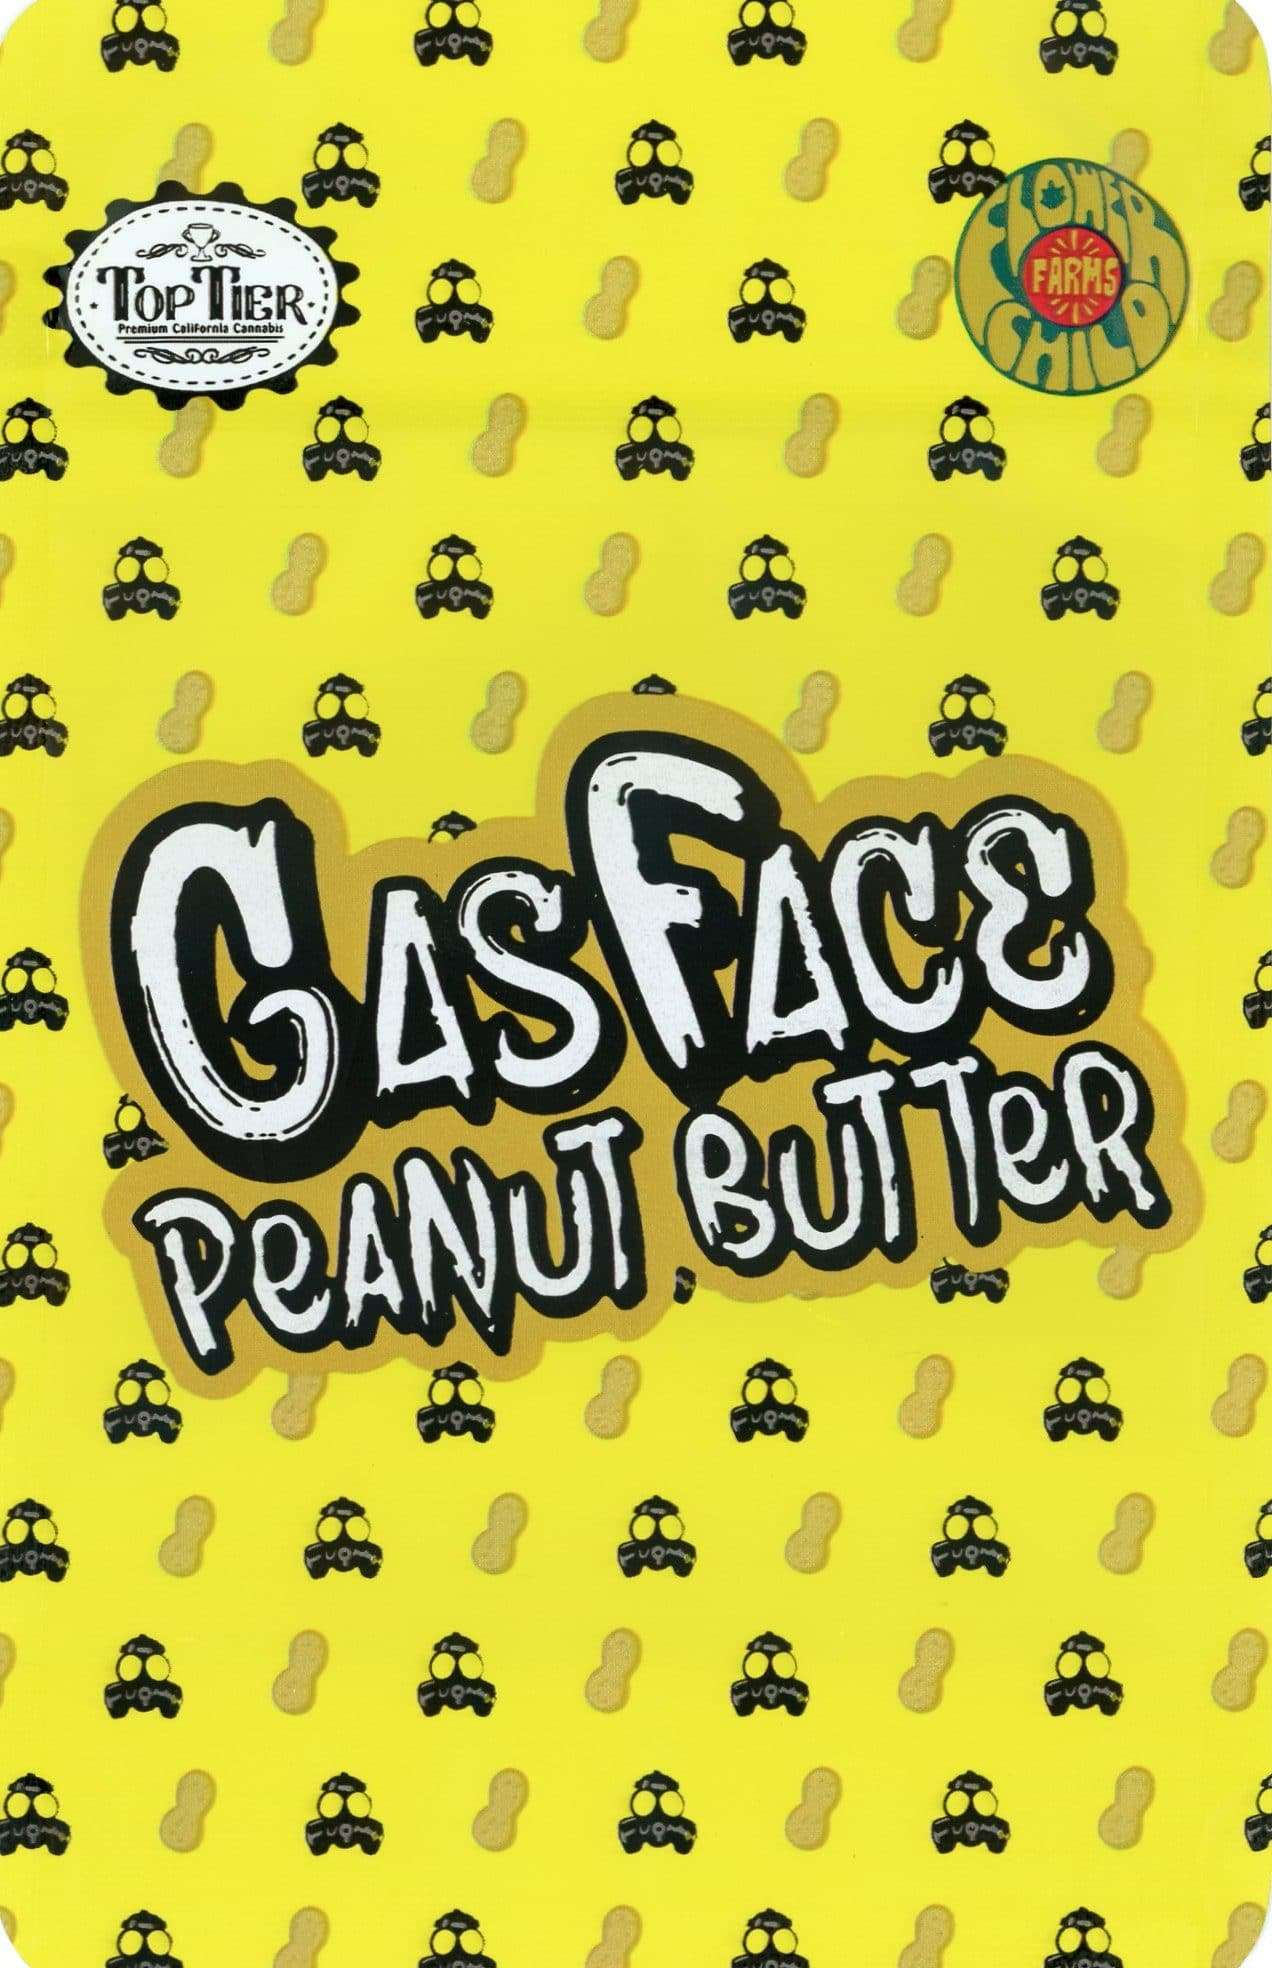 Backpack Boyz Mylar Bags 3.5g - Gas Face Peanut Butter